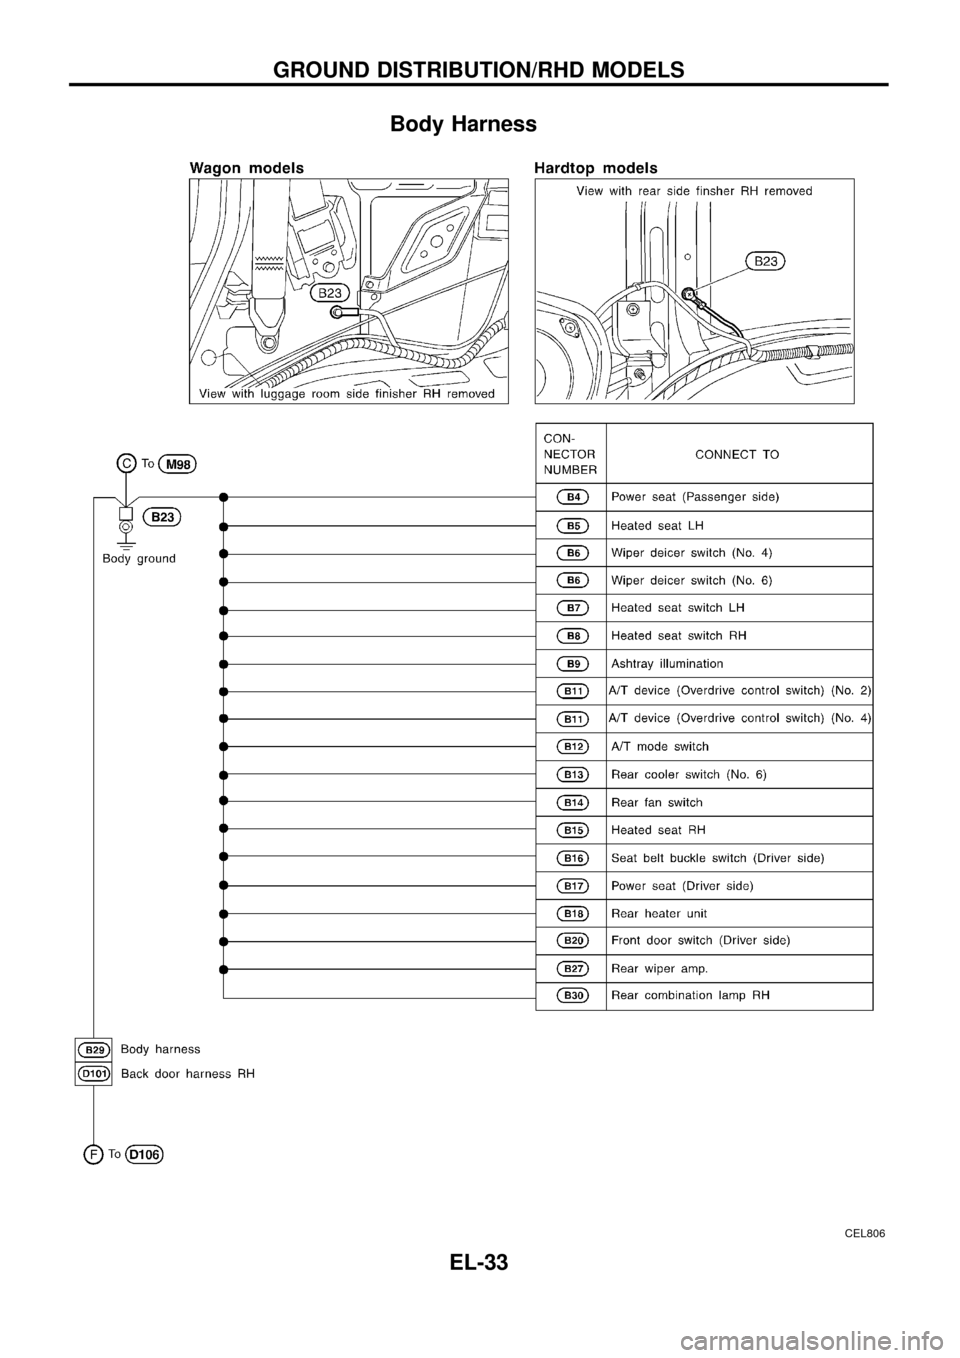 NISSAN PATROL 1998 Y61 / 5.G Electrical System Owners Guide Body Harness
CEL806
GROUND DISTRIBUTION/RHD MODELS
EL-33 